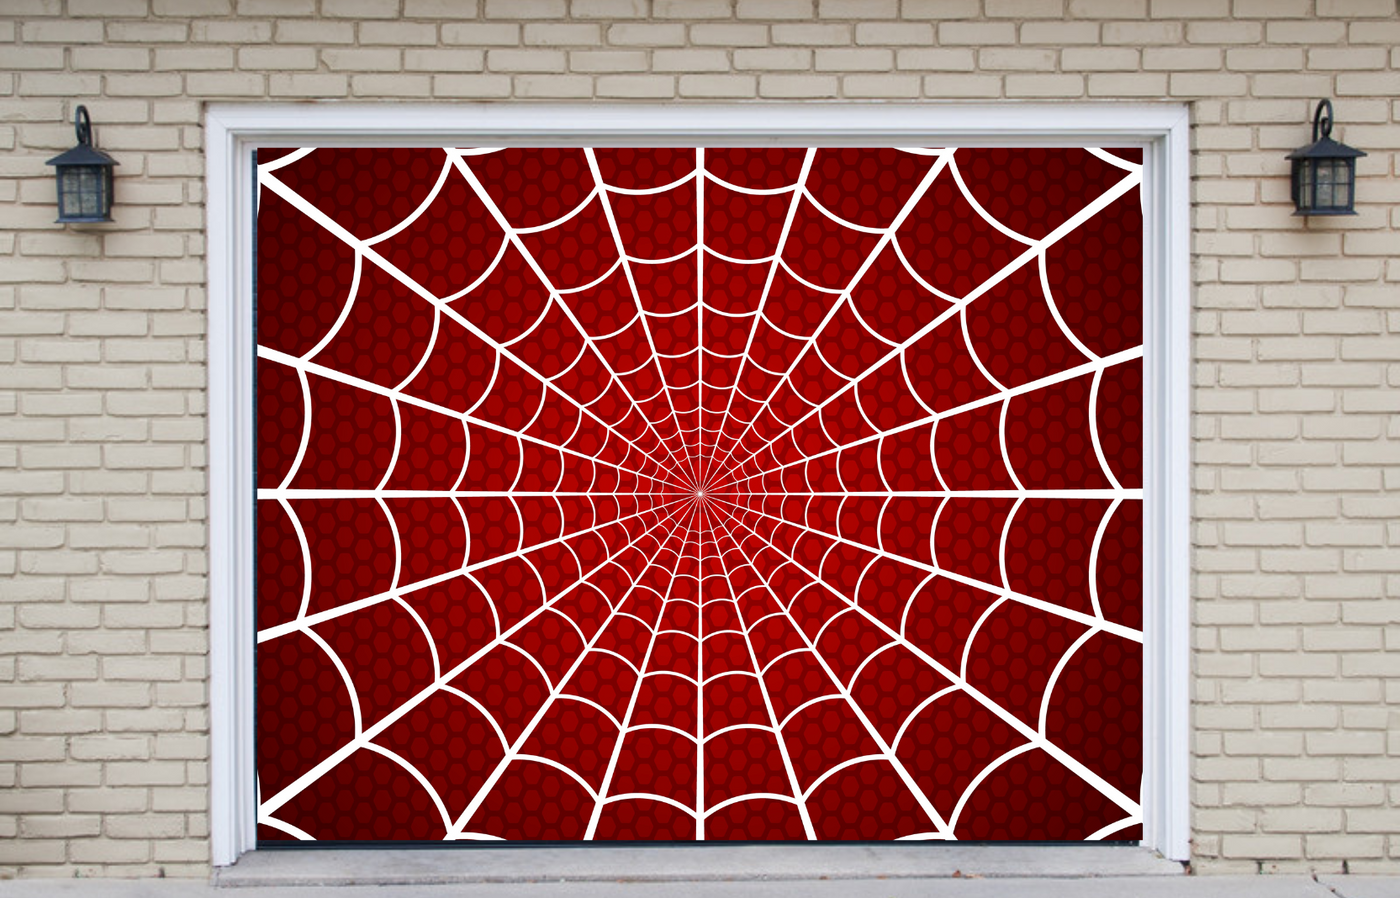 Red Spider Web Garage Door Cover Wrap Decoration